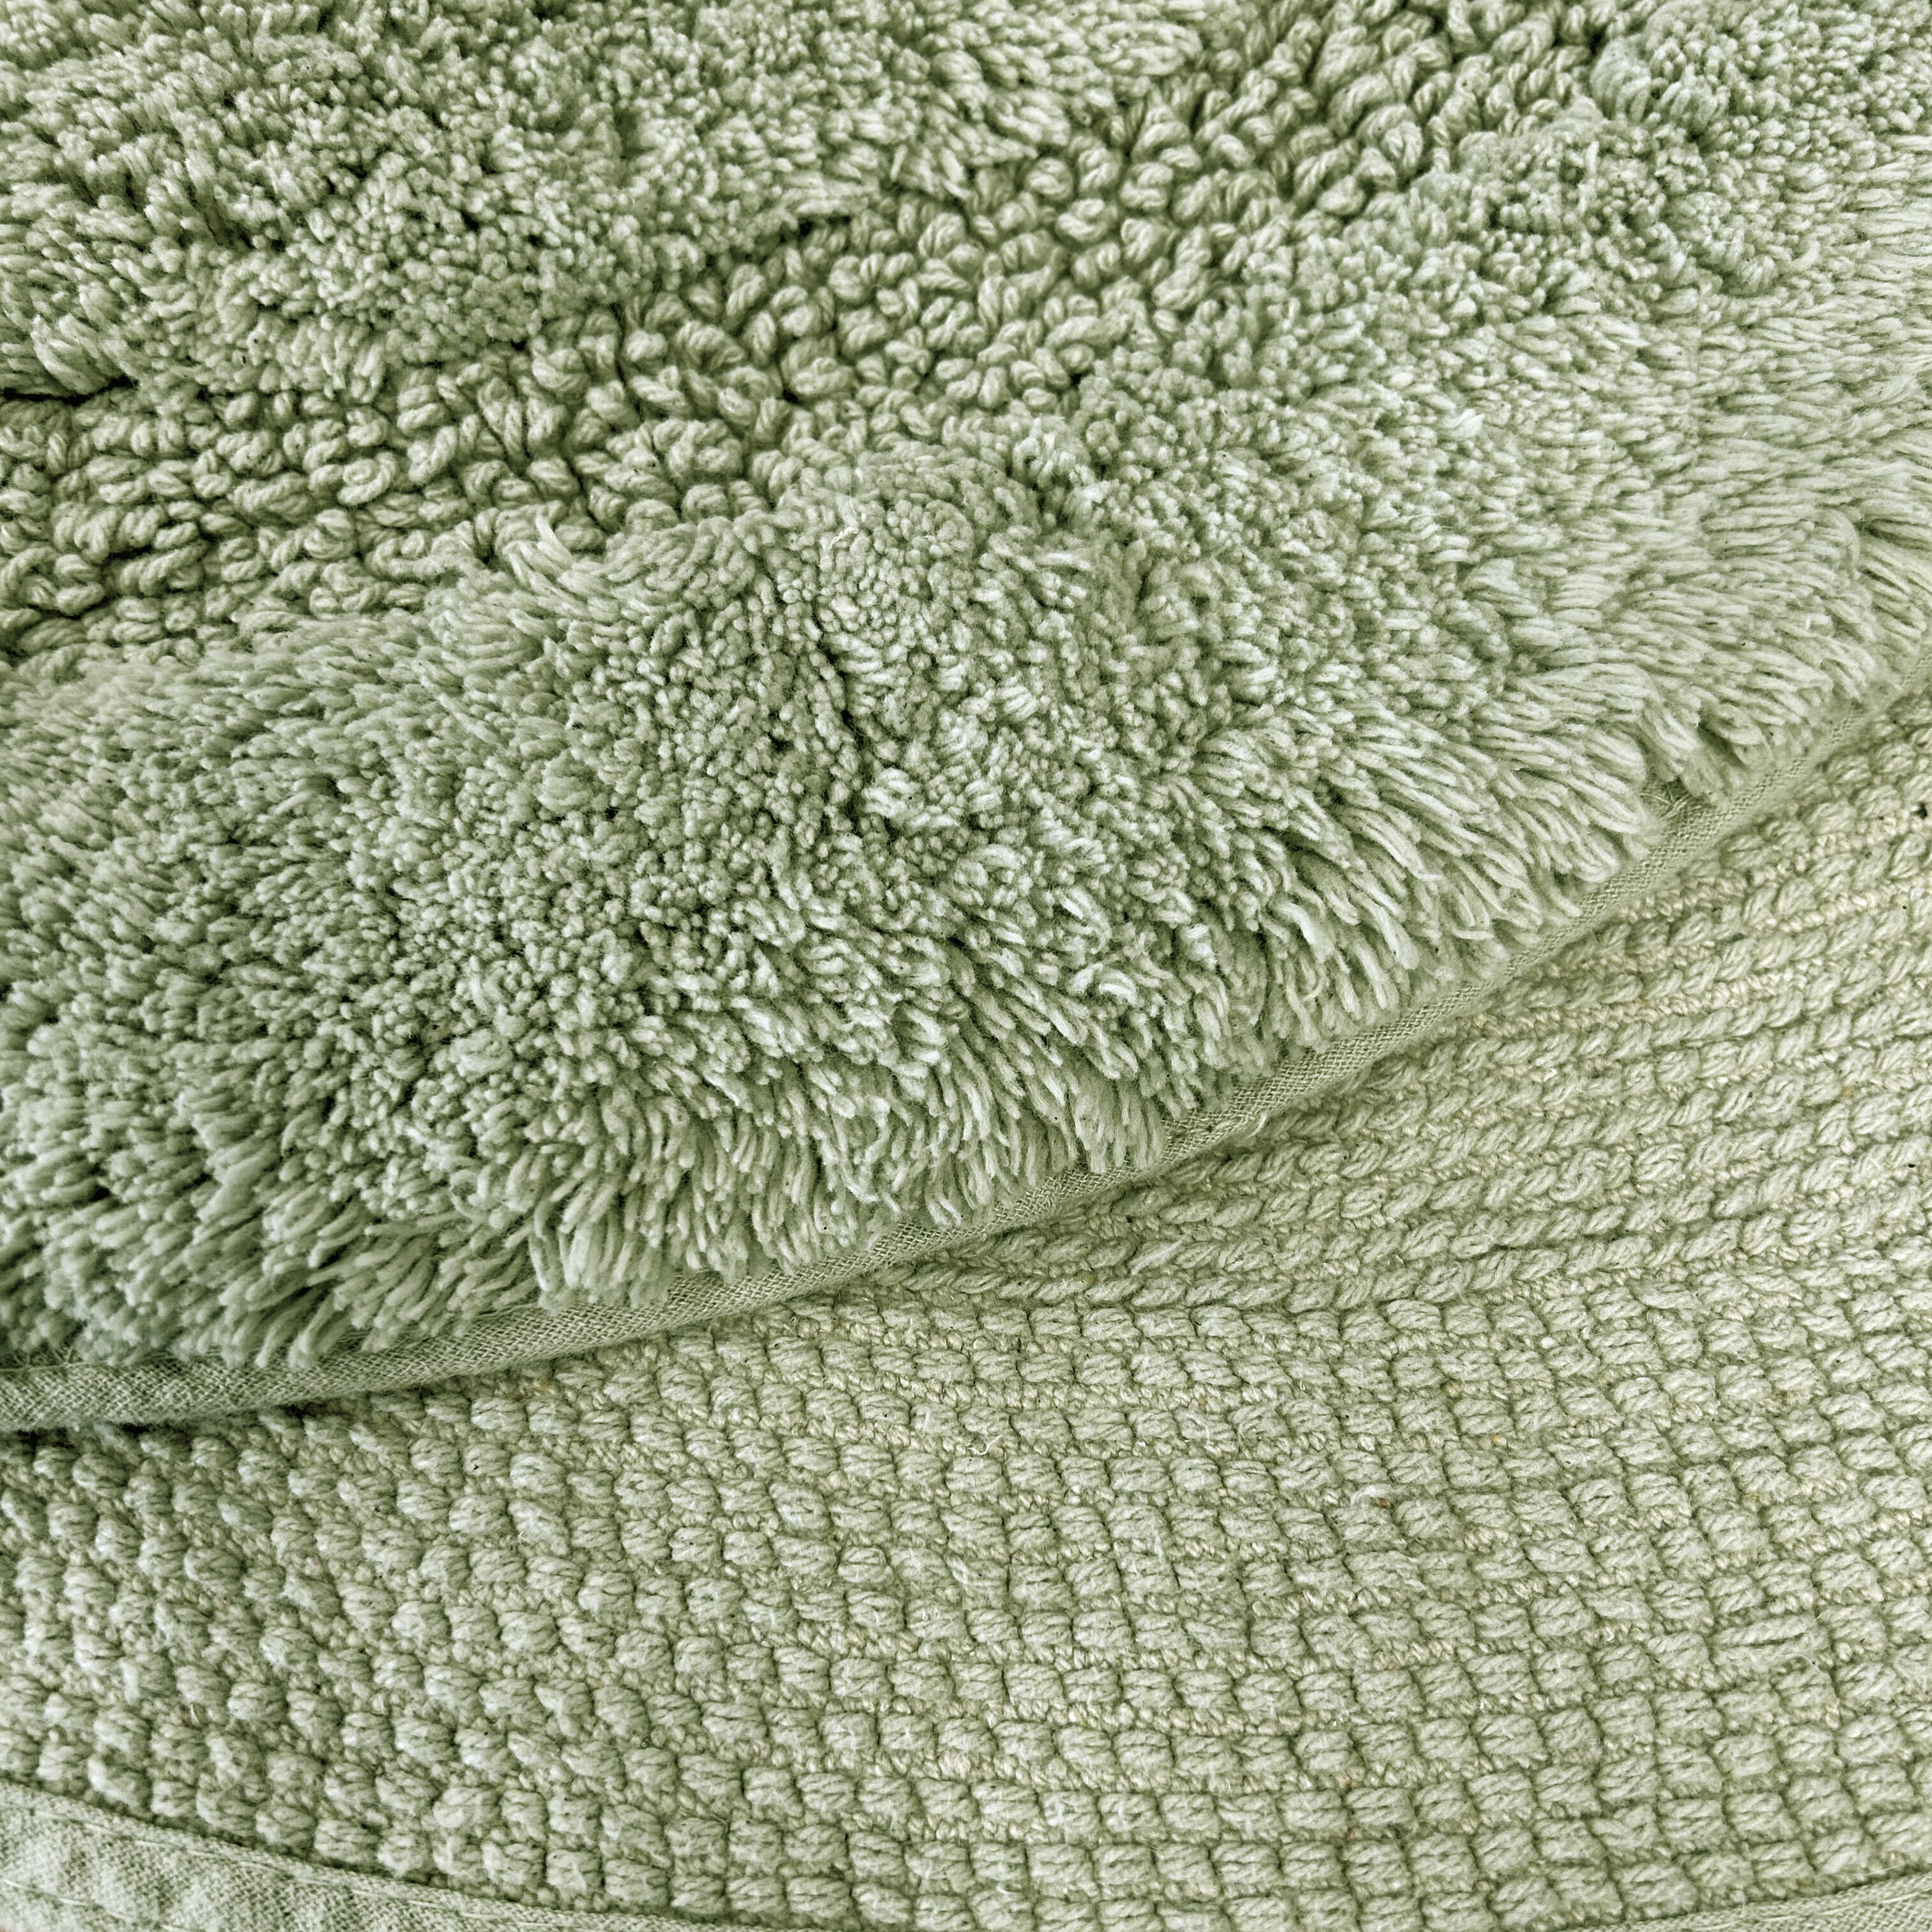 Sage green bath mat close up.